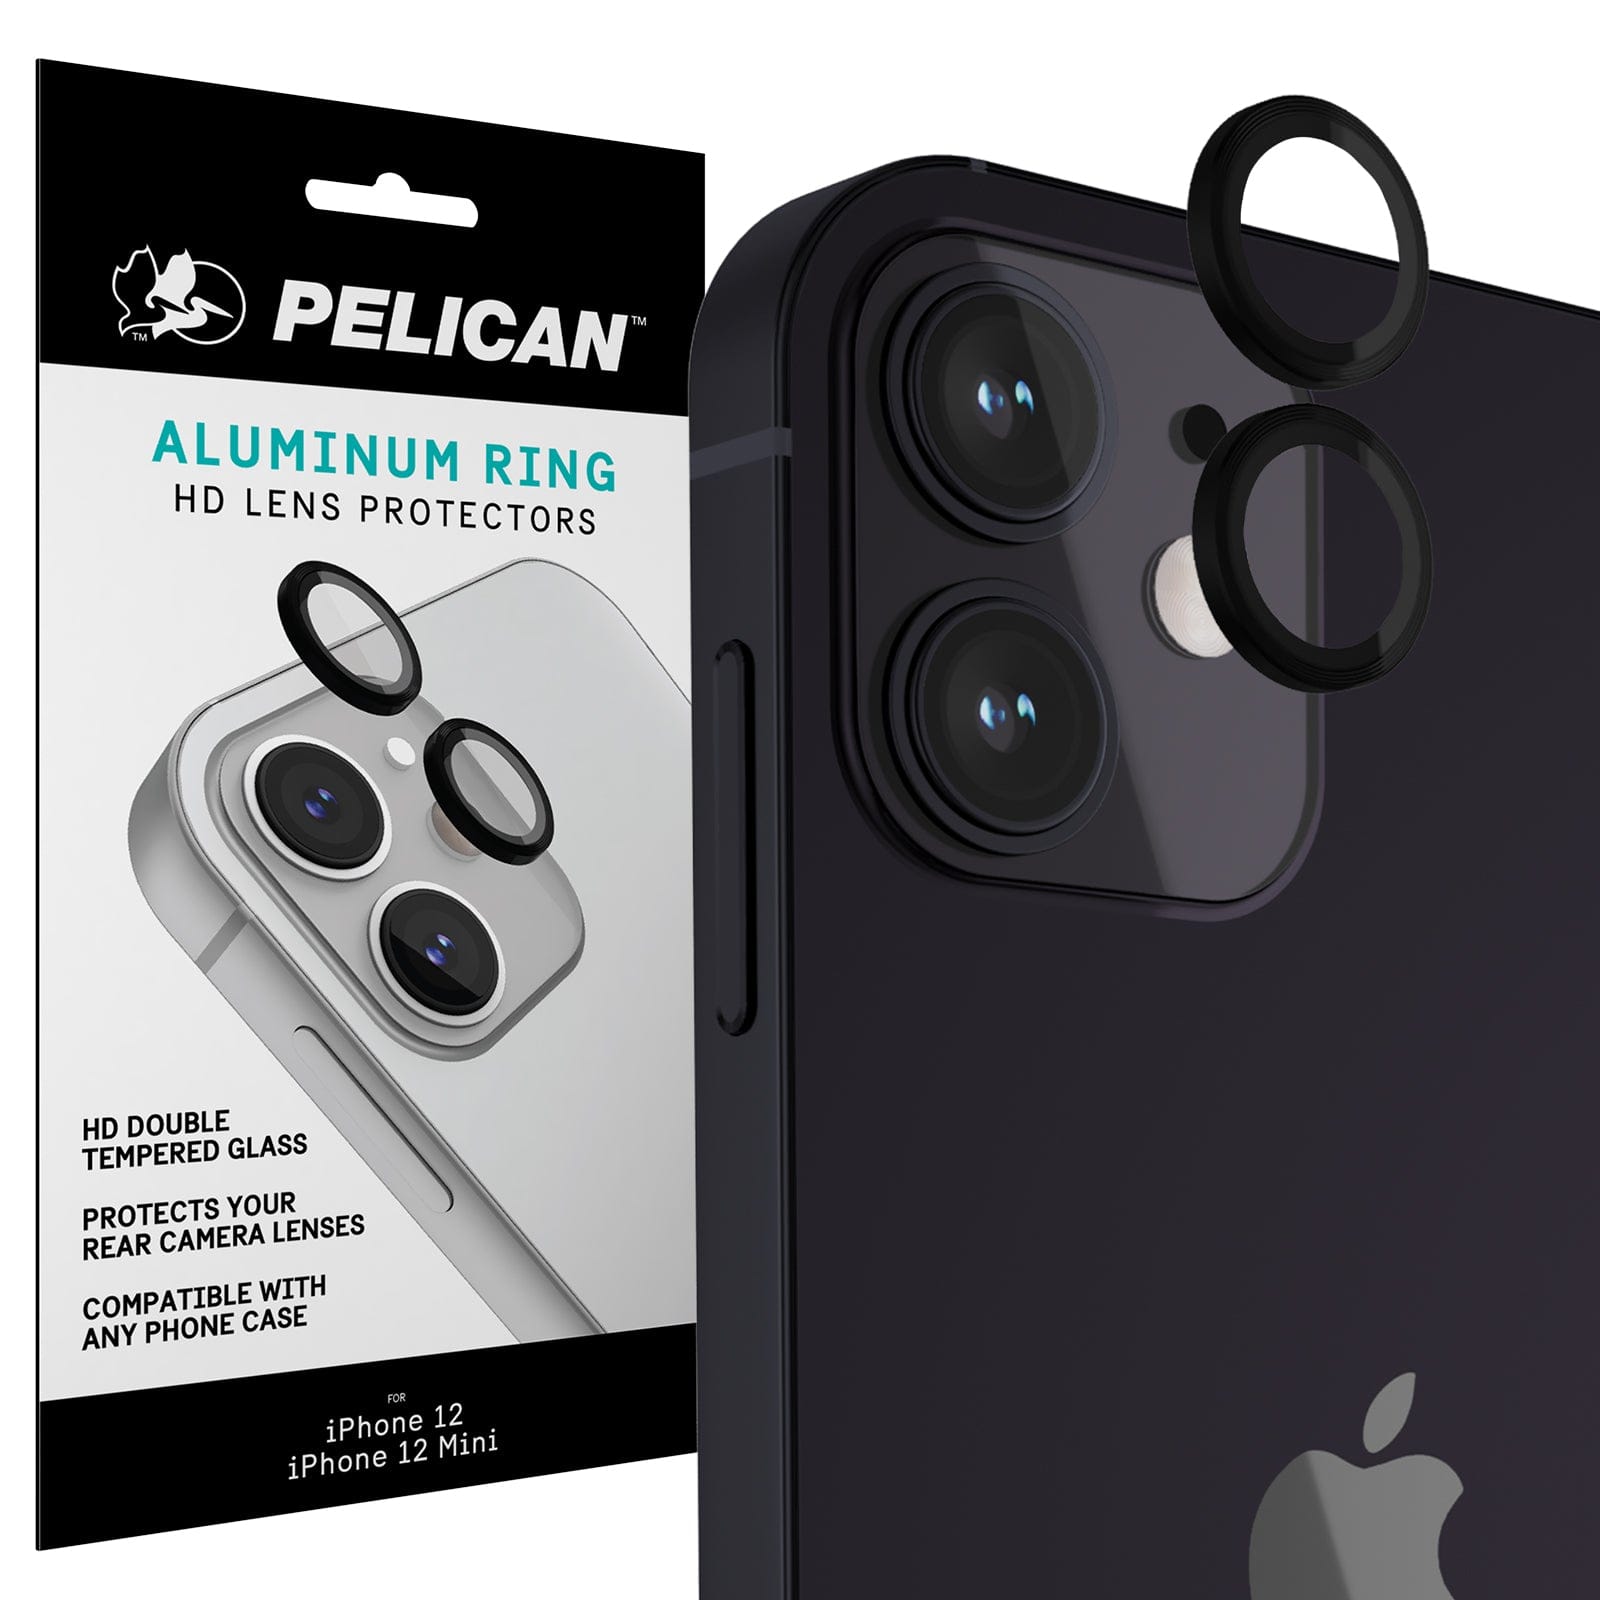 Pelican Ring Lens Protector (Aluminum) - iPhone 12 / 12 mini Packaging